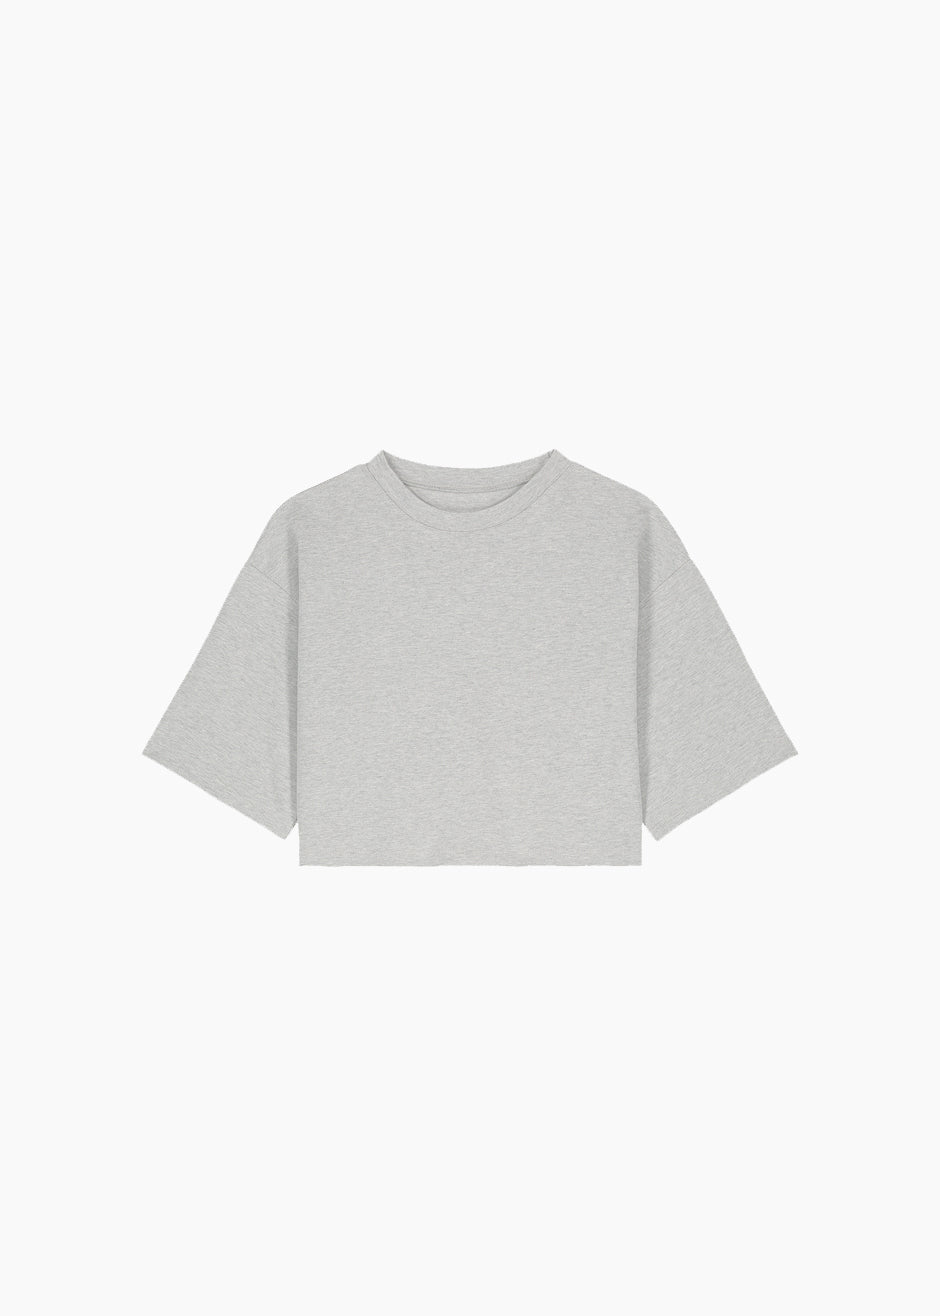 Karina Cropped T-Shirt - Heather Grey - 7